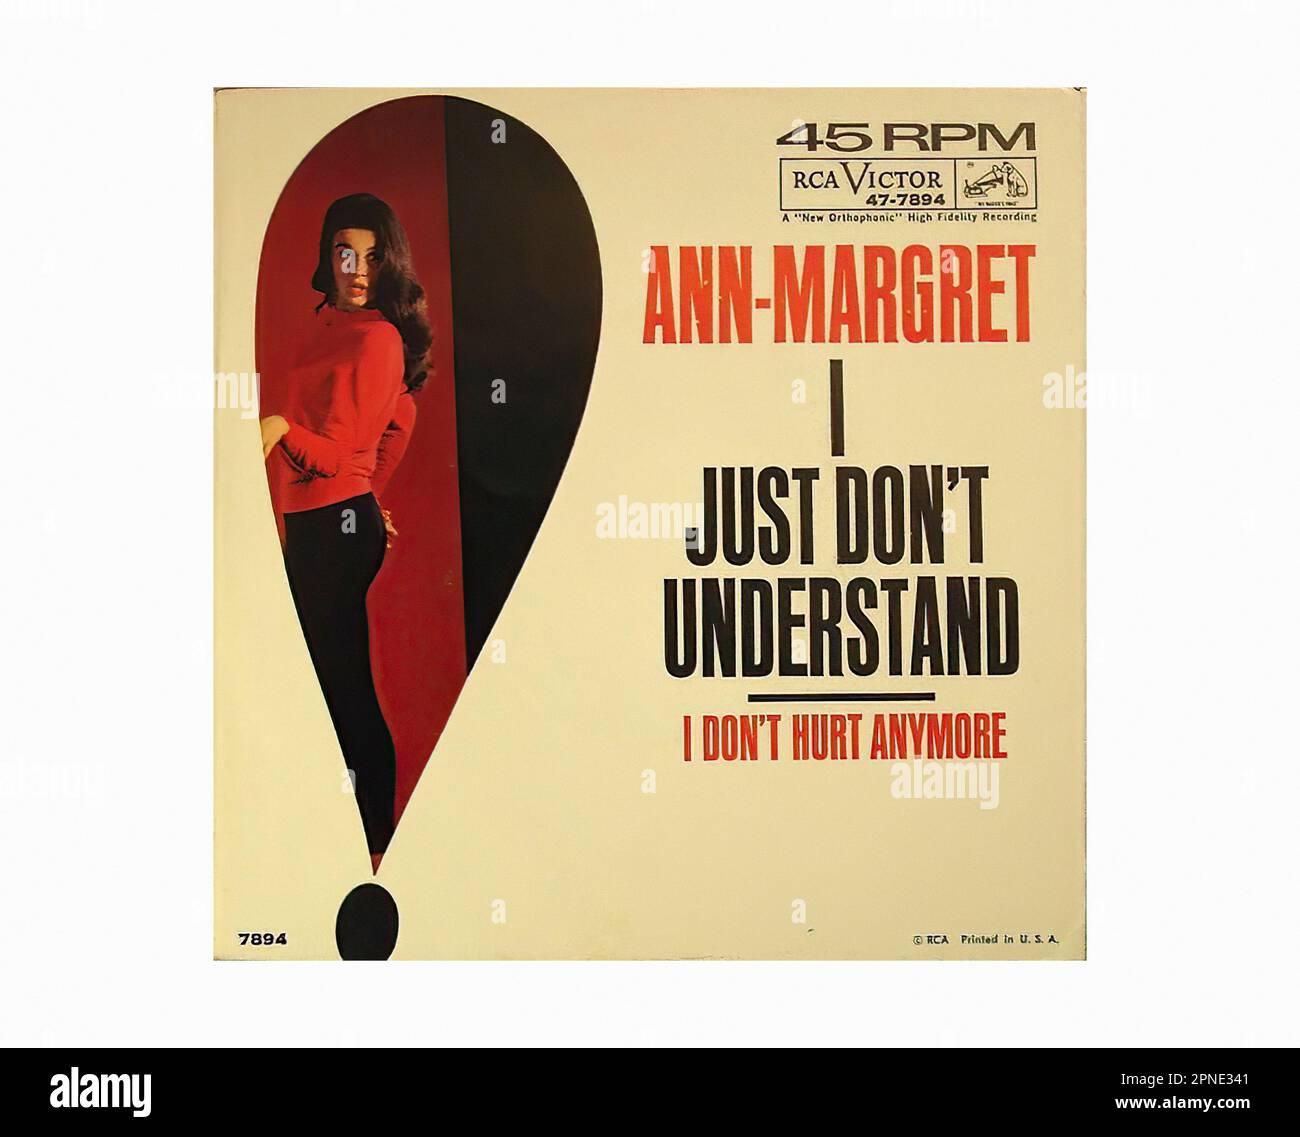 Ann-Margret 1961 06 - Vintage 45 R.P.M Music Vinyl Record Stock Photo